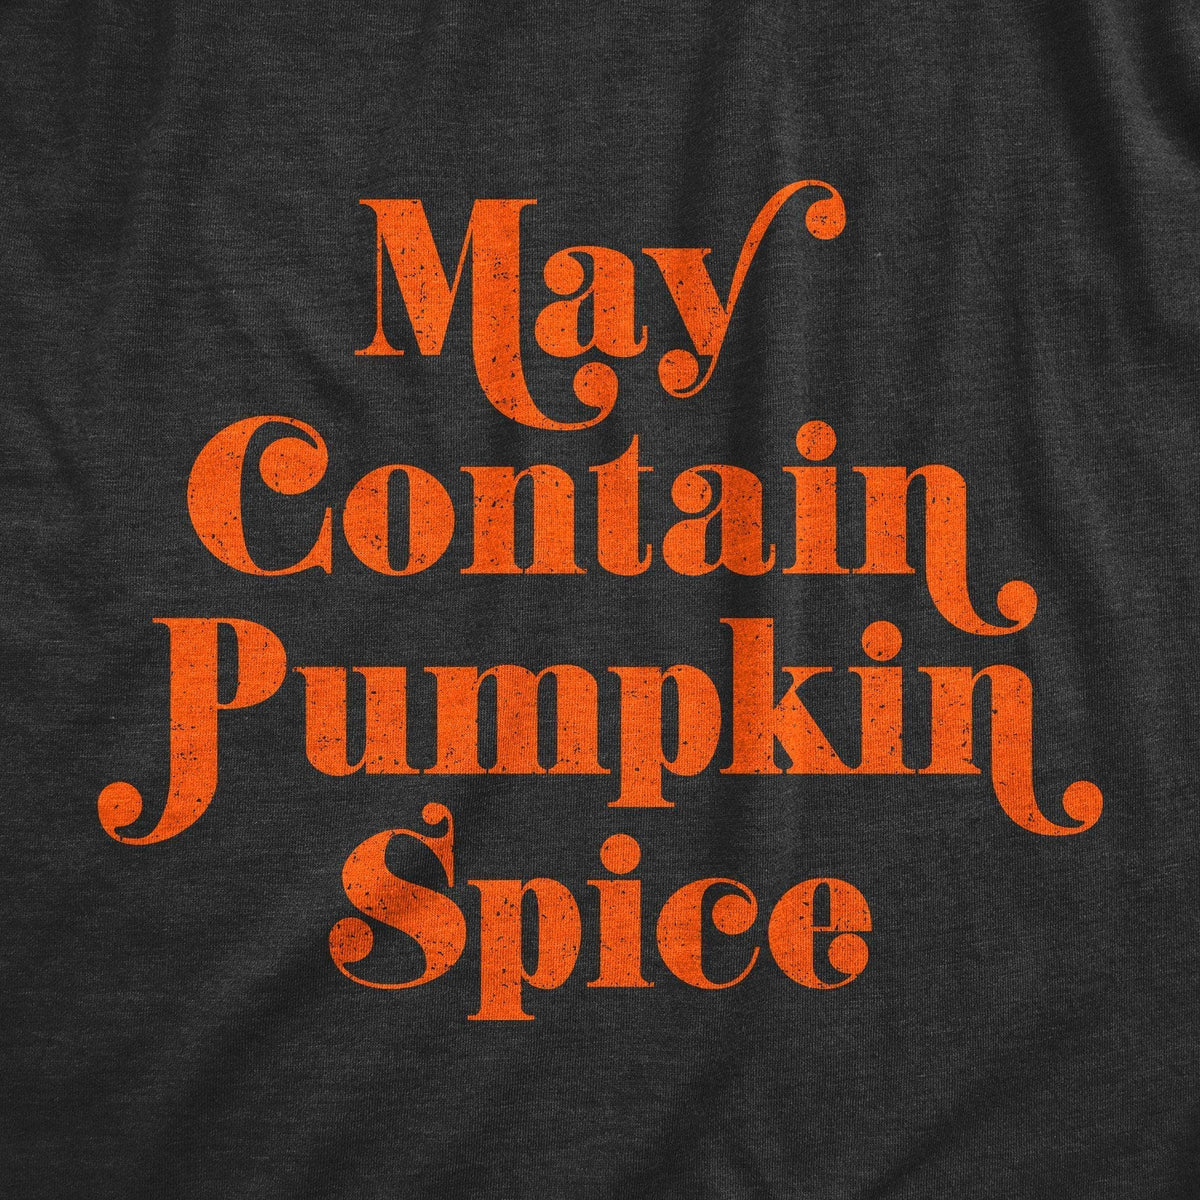 May Contain Pumpkin Spice Women&#39;s Tshirt - Crazy Dog T-Shirts